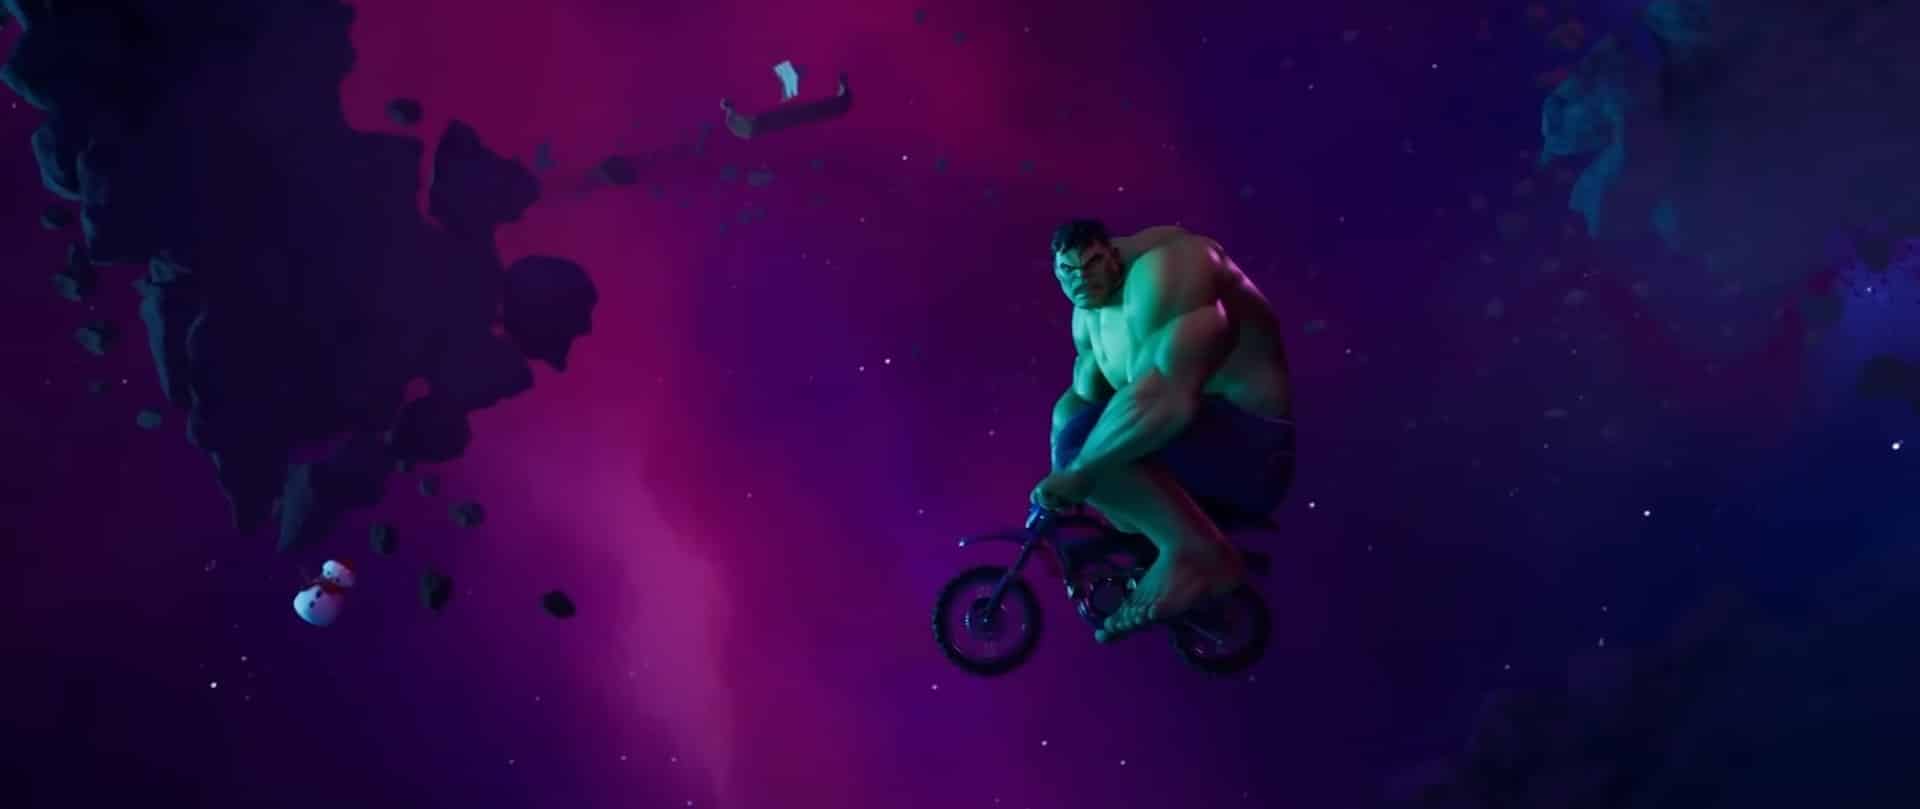 Hulk riding a small dirtbike